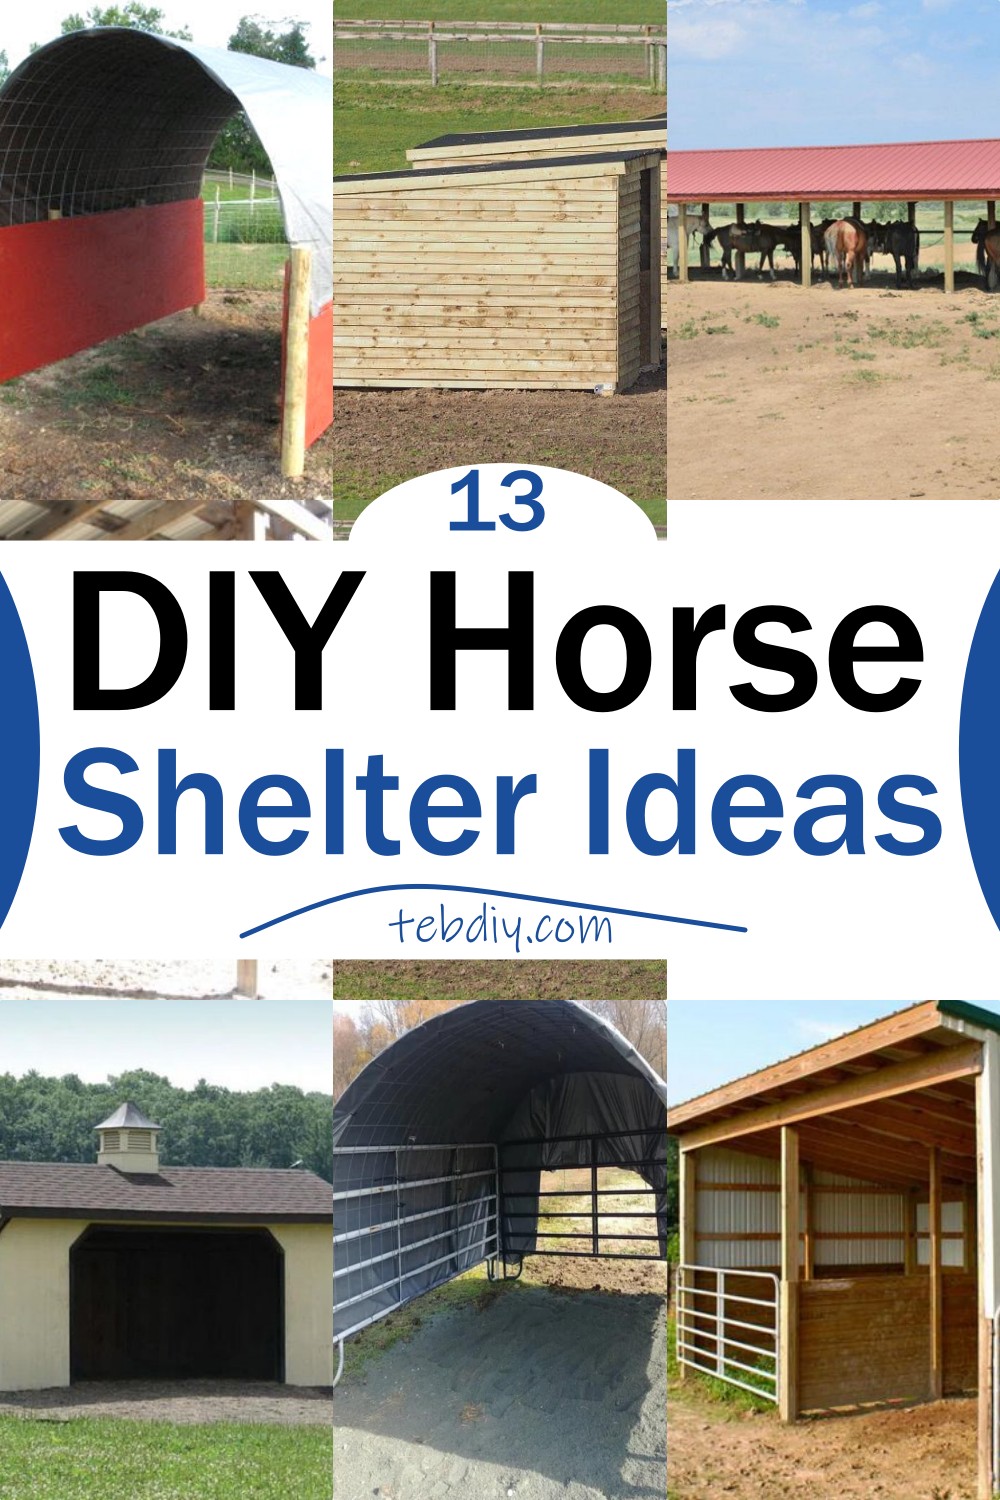 13 DIY Horse Shelter Ideas